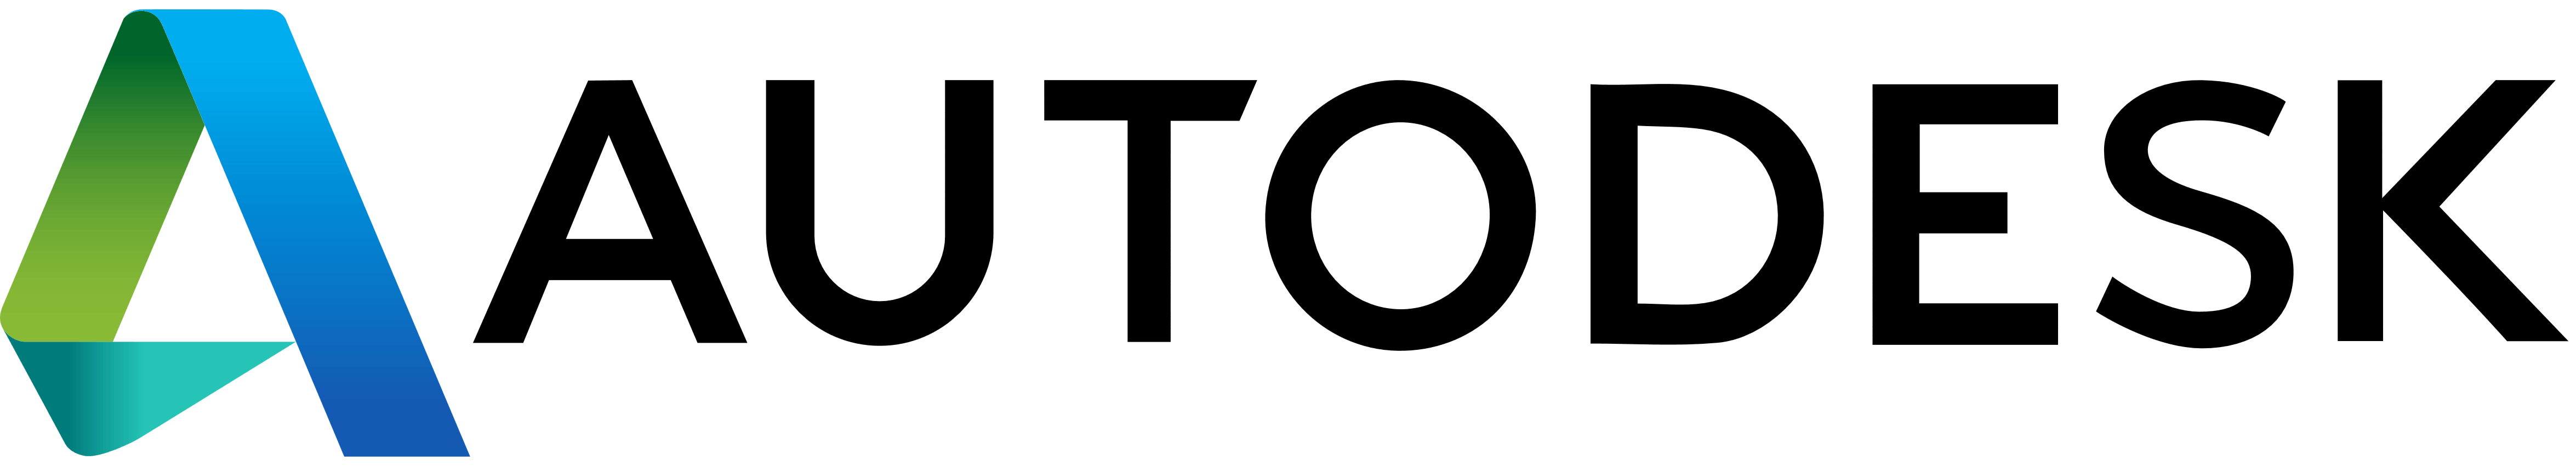 Autodesk logo, logotype